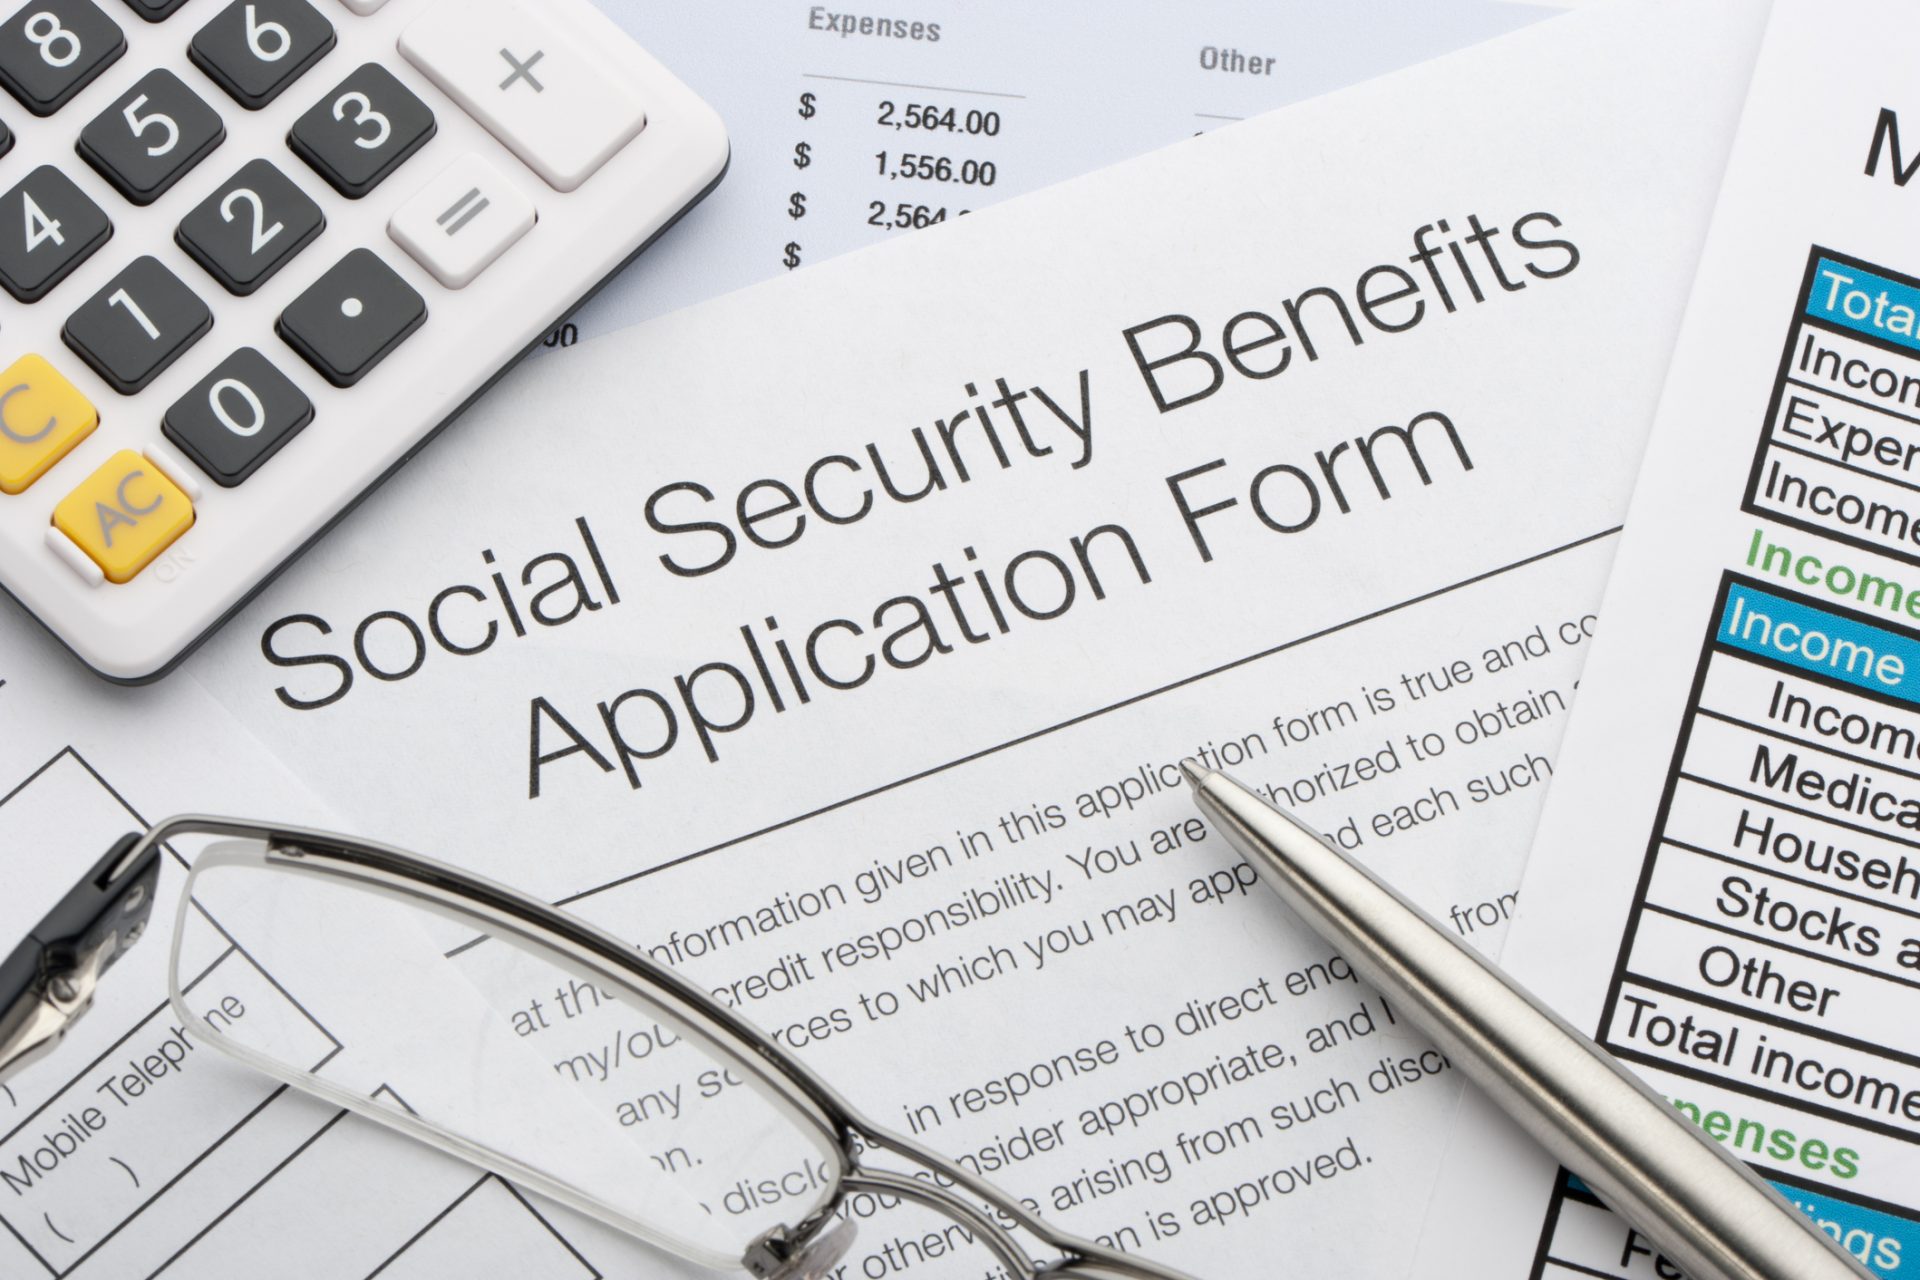 1. Social Security  